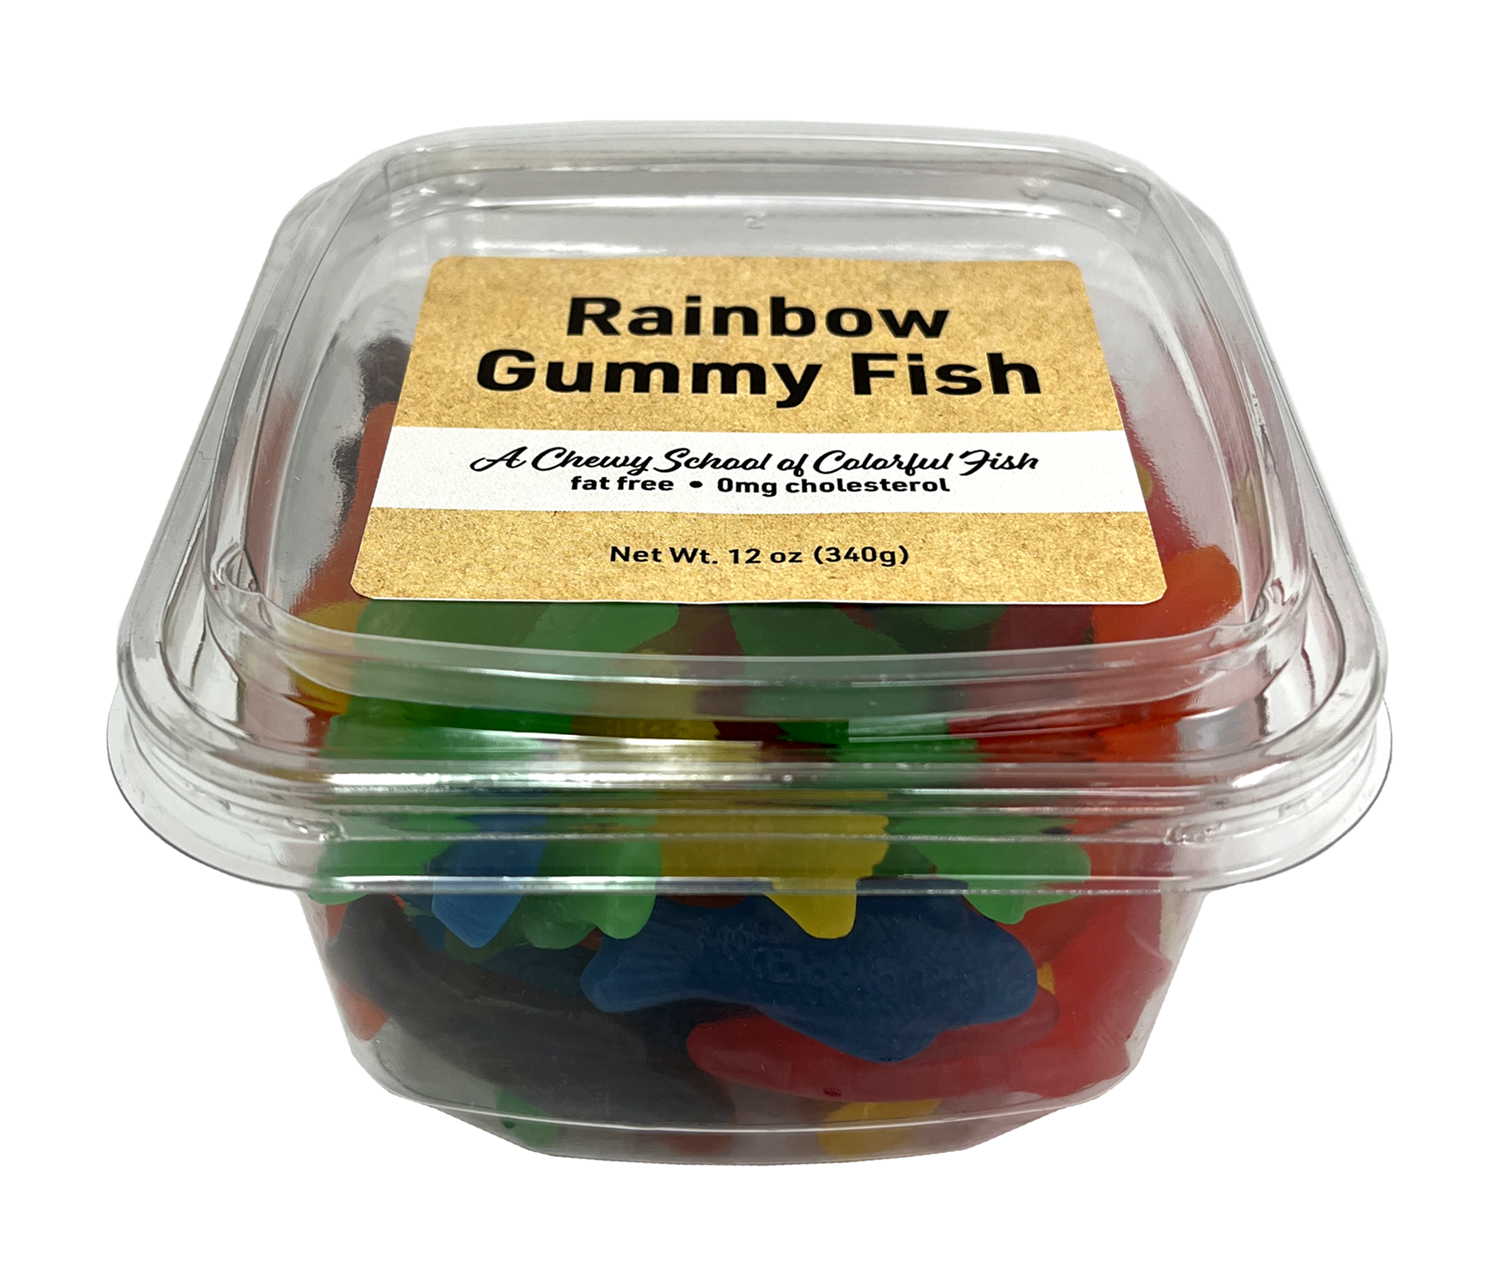 Rainbow gummy fish 12 oz tub